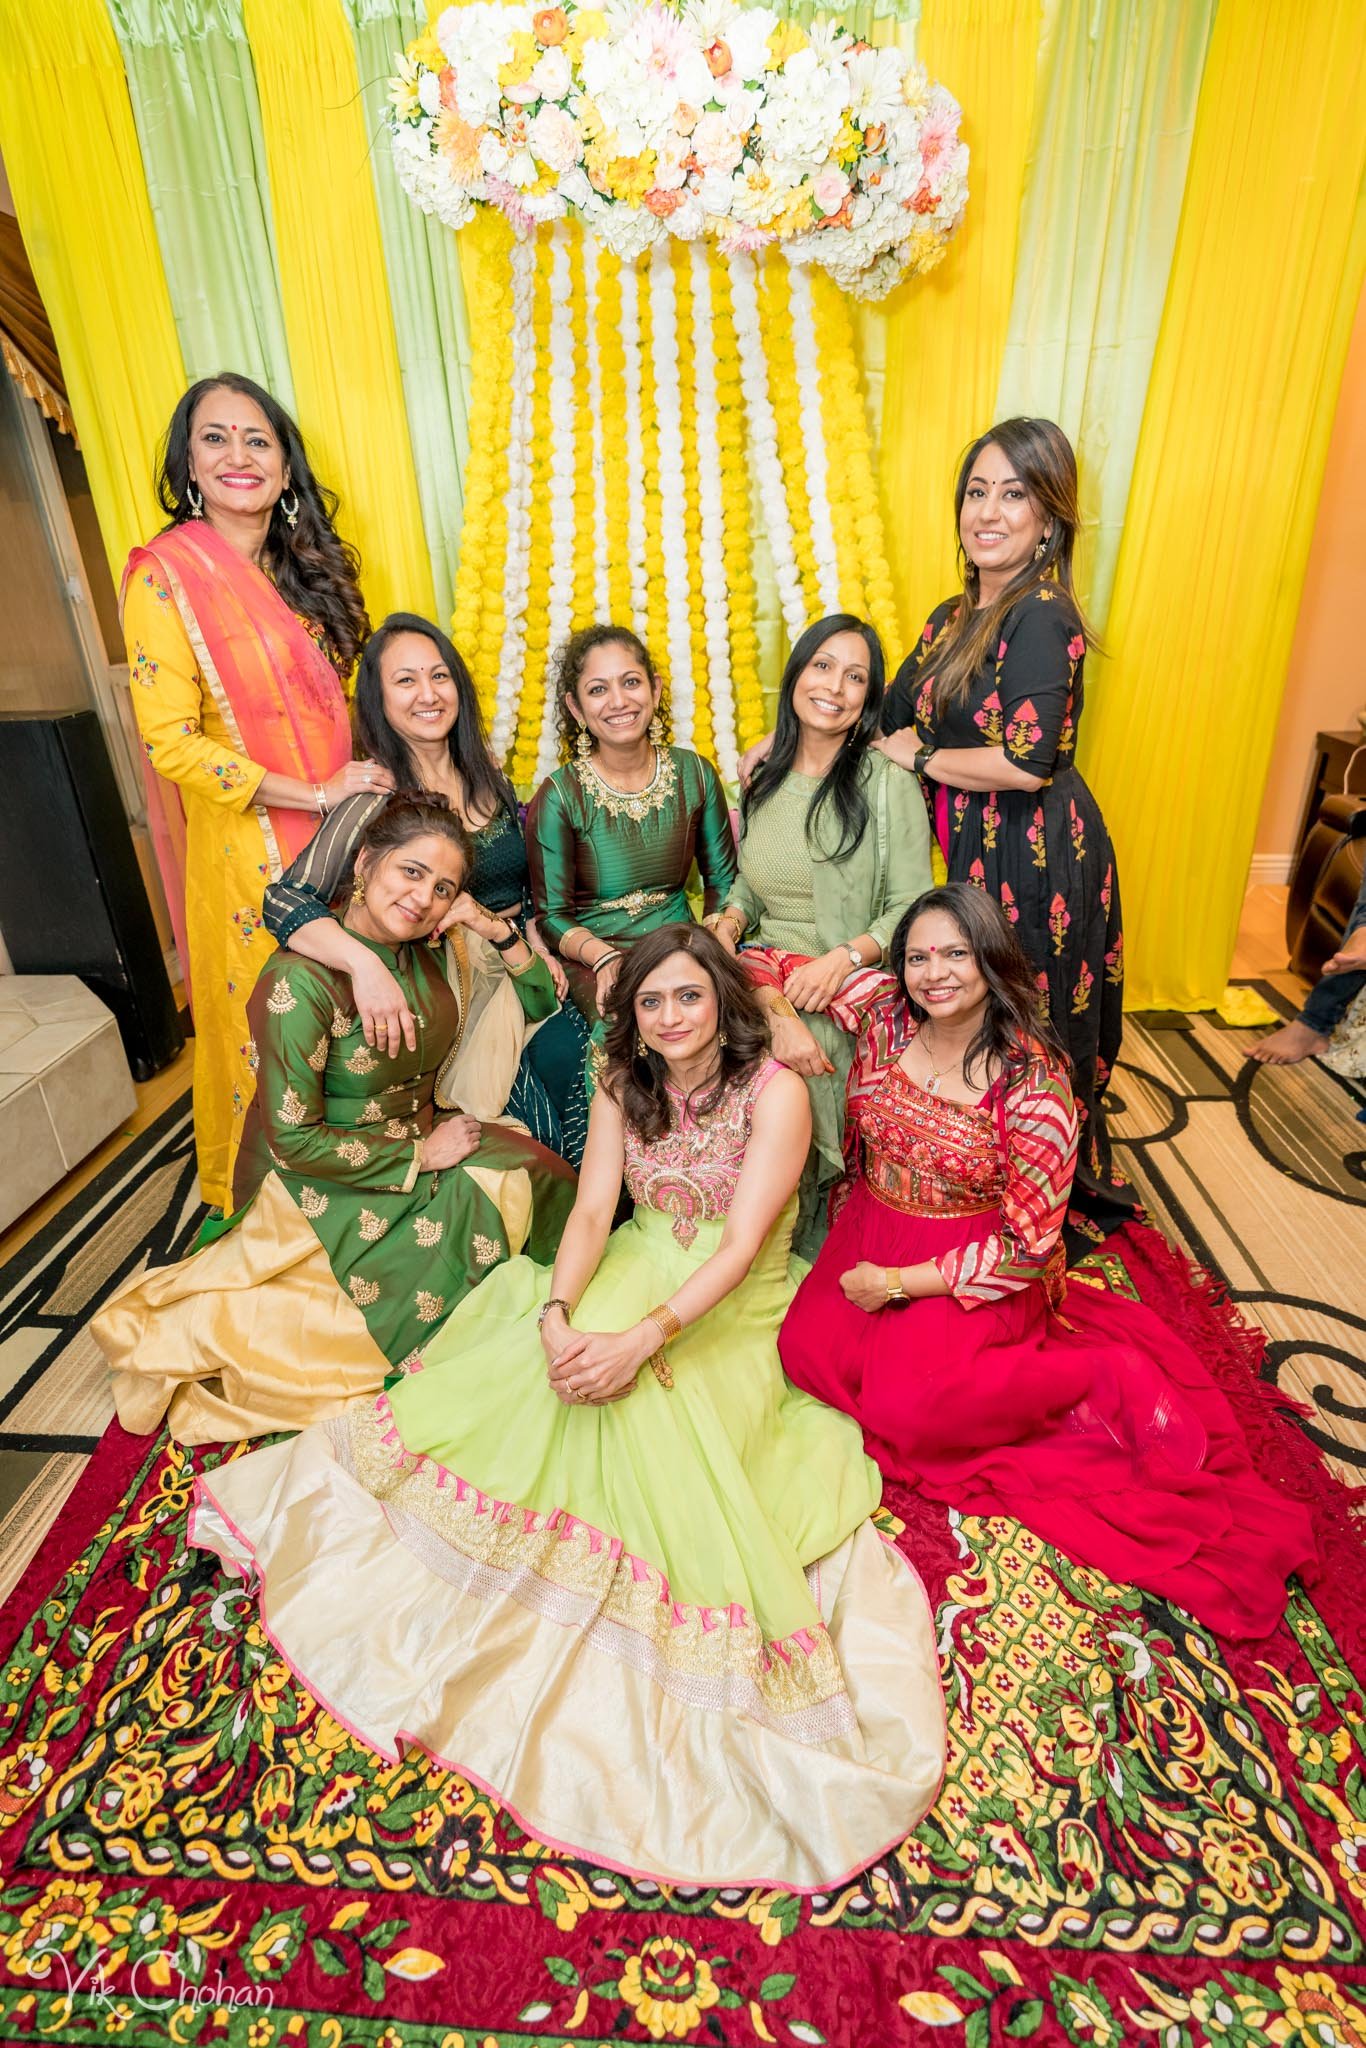 2022-02-03-Hely-&-Parth-Mendi-Indian-Wedding-Vik-Chohan-Photography-Photo-Booth-Social-Media-VCP-210.jpg